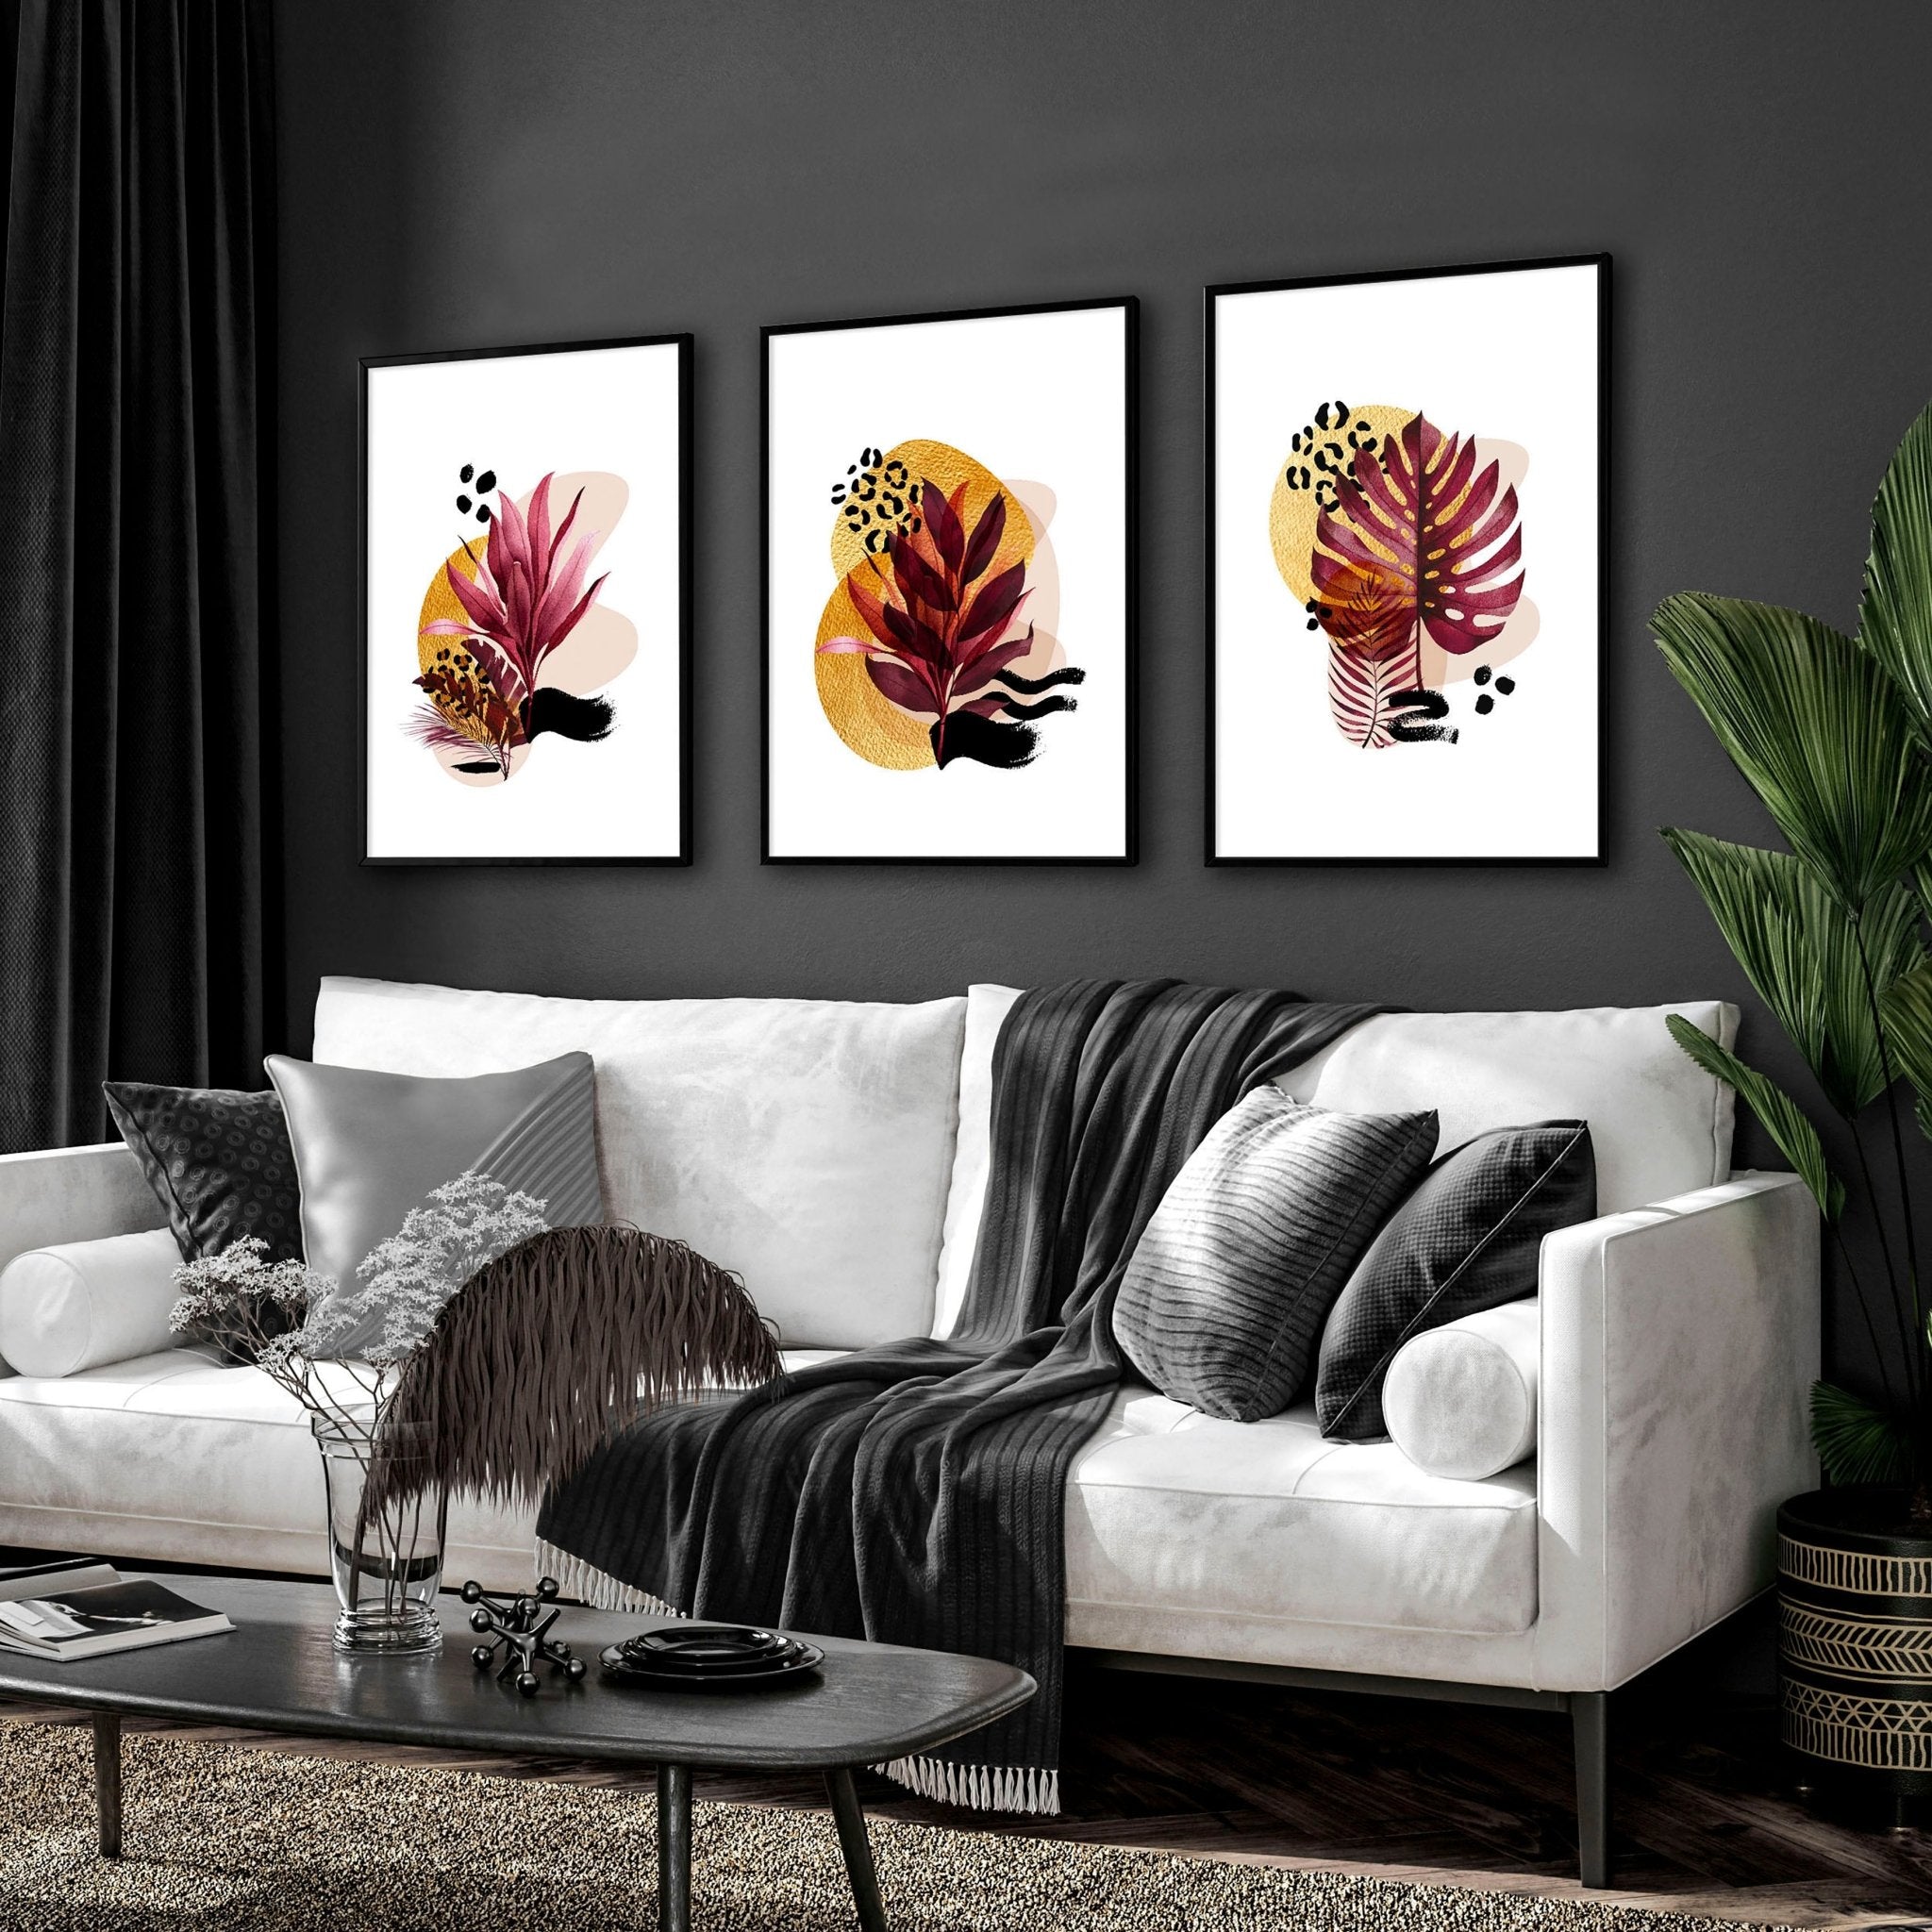 Tropical living room decor | set of 3 wall art prints - About Wall Art